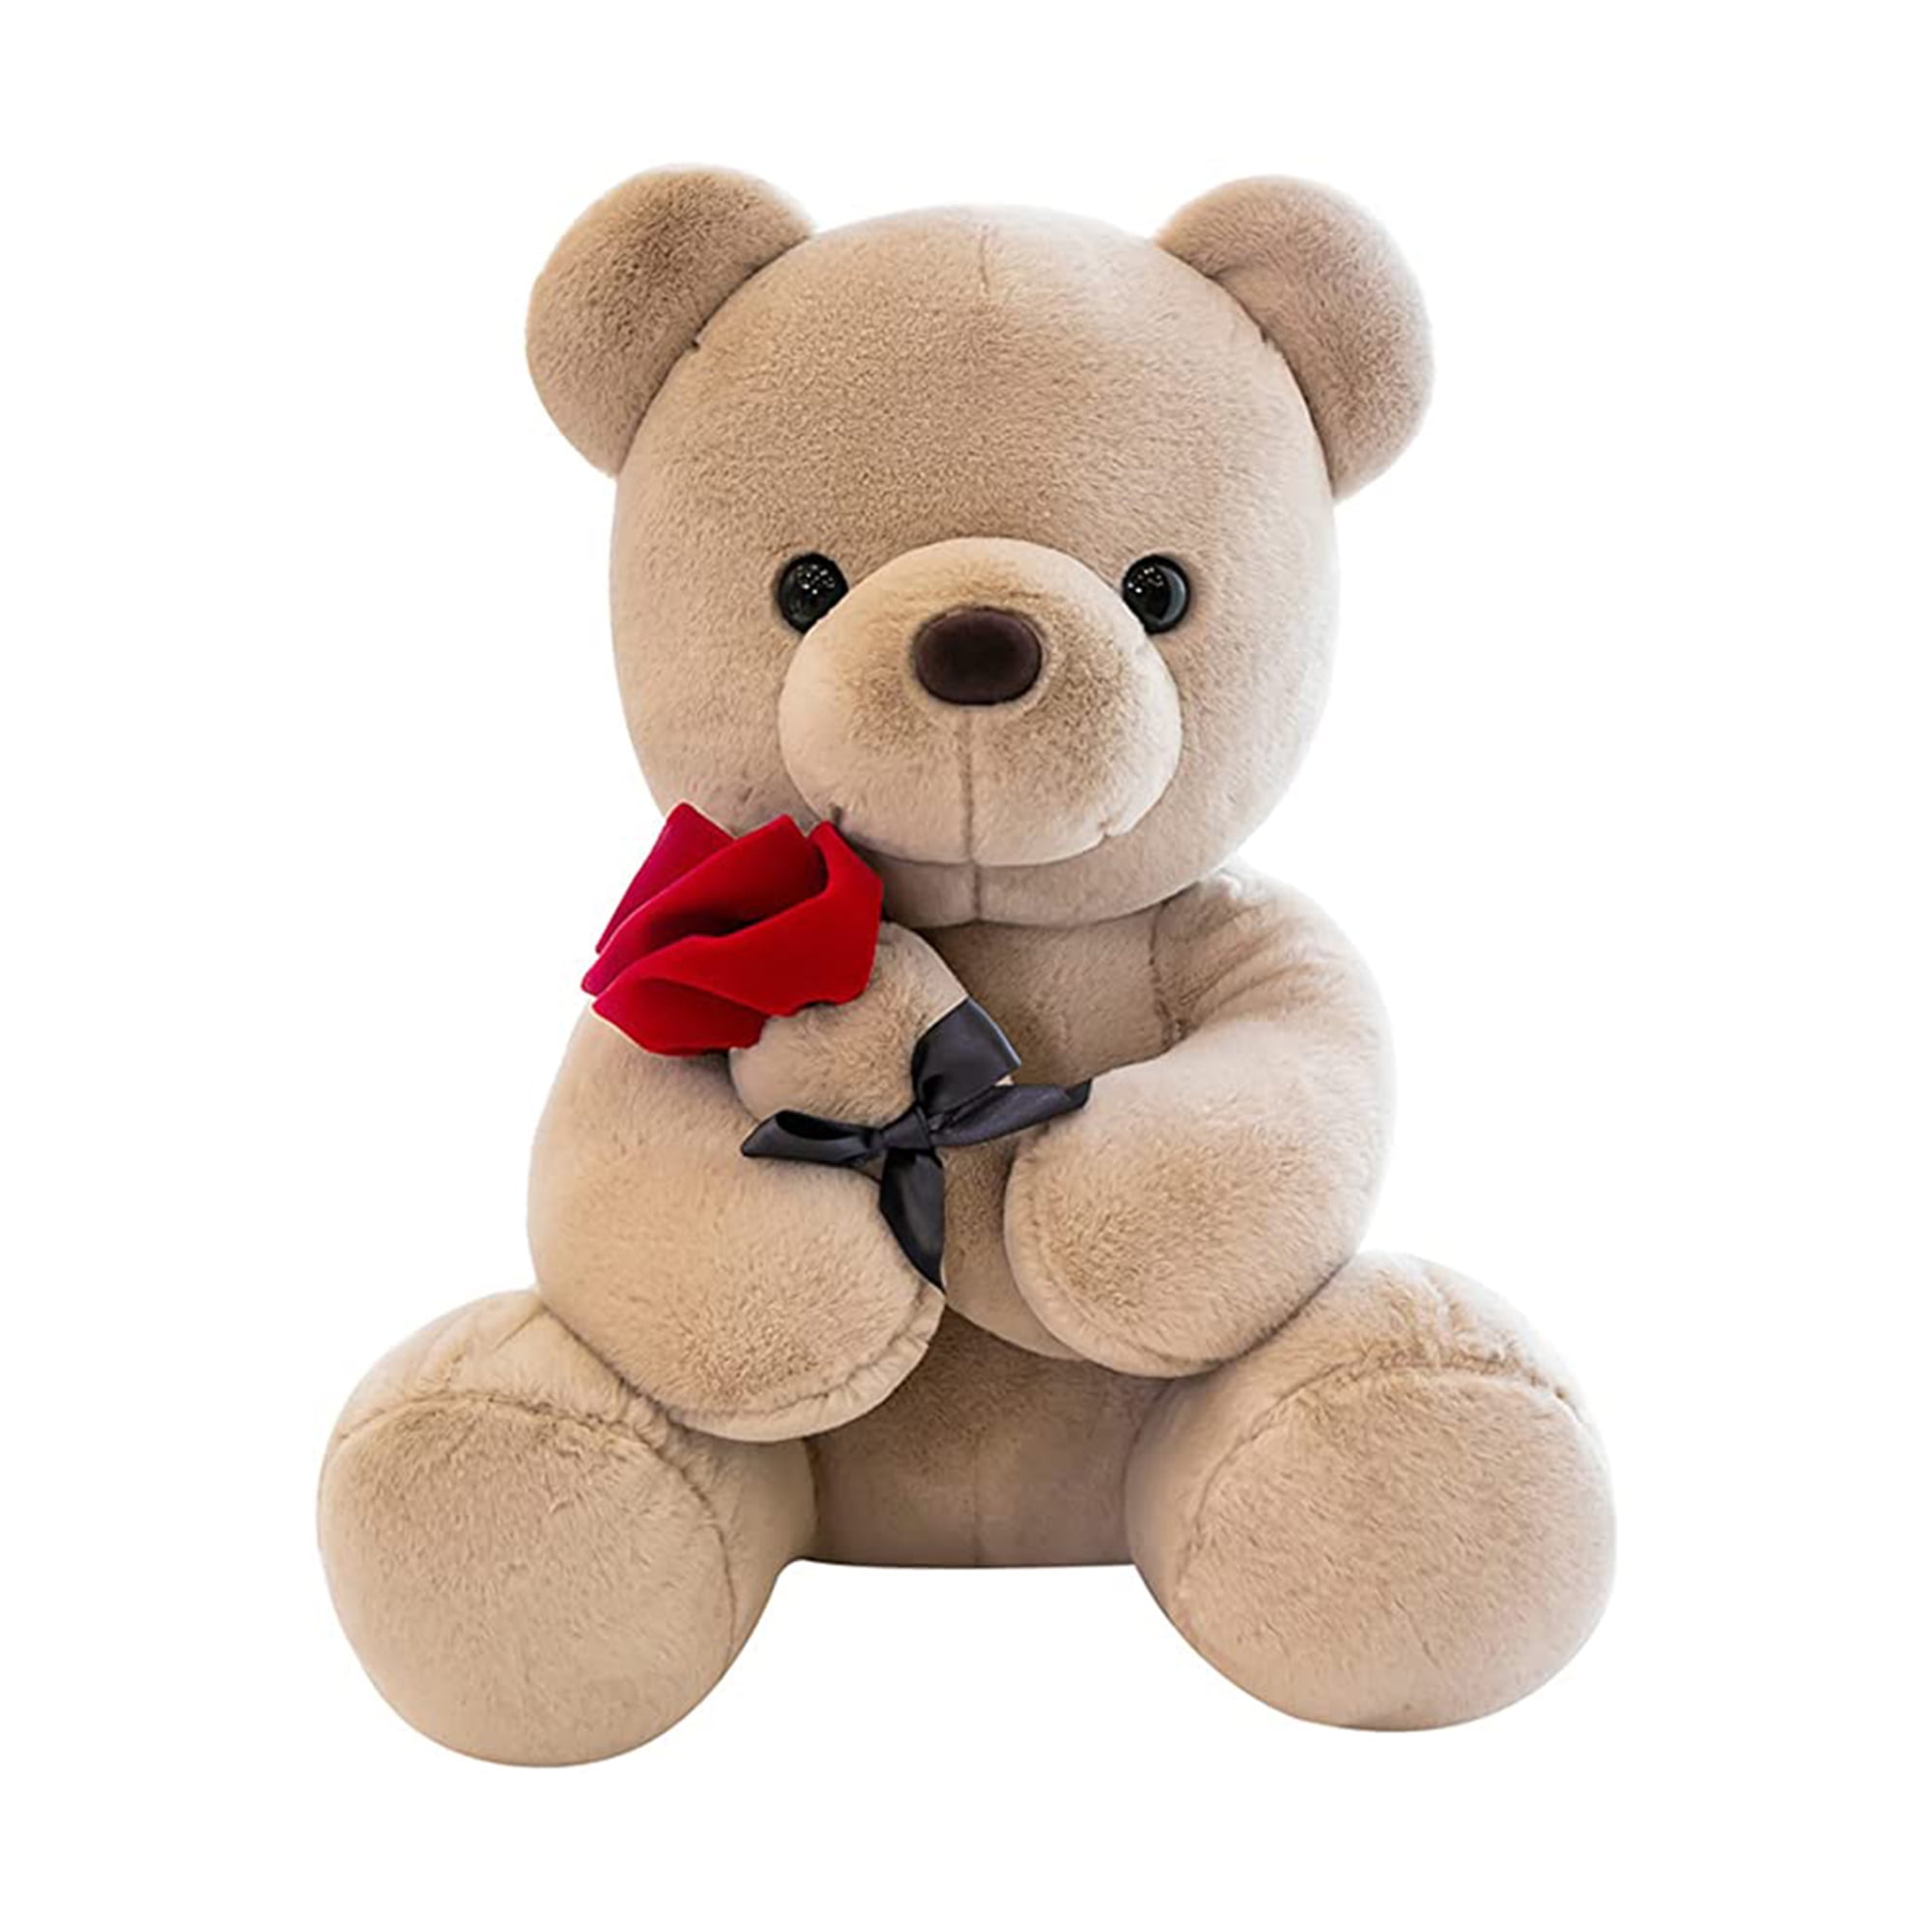 Valentine 7" Stuffed Animal Plush Teddy Bear LOVE Pink Hearts Oso de Peluche NEW 